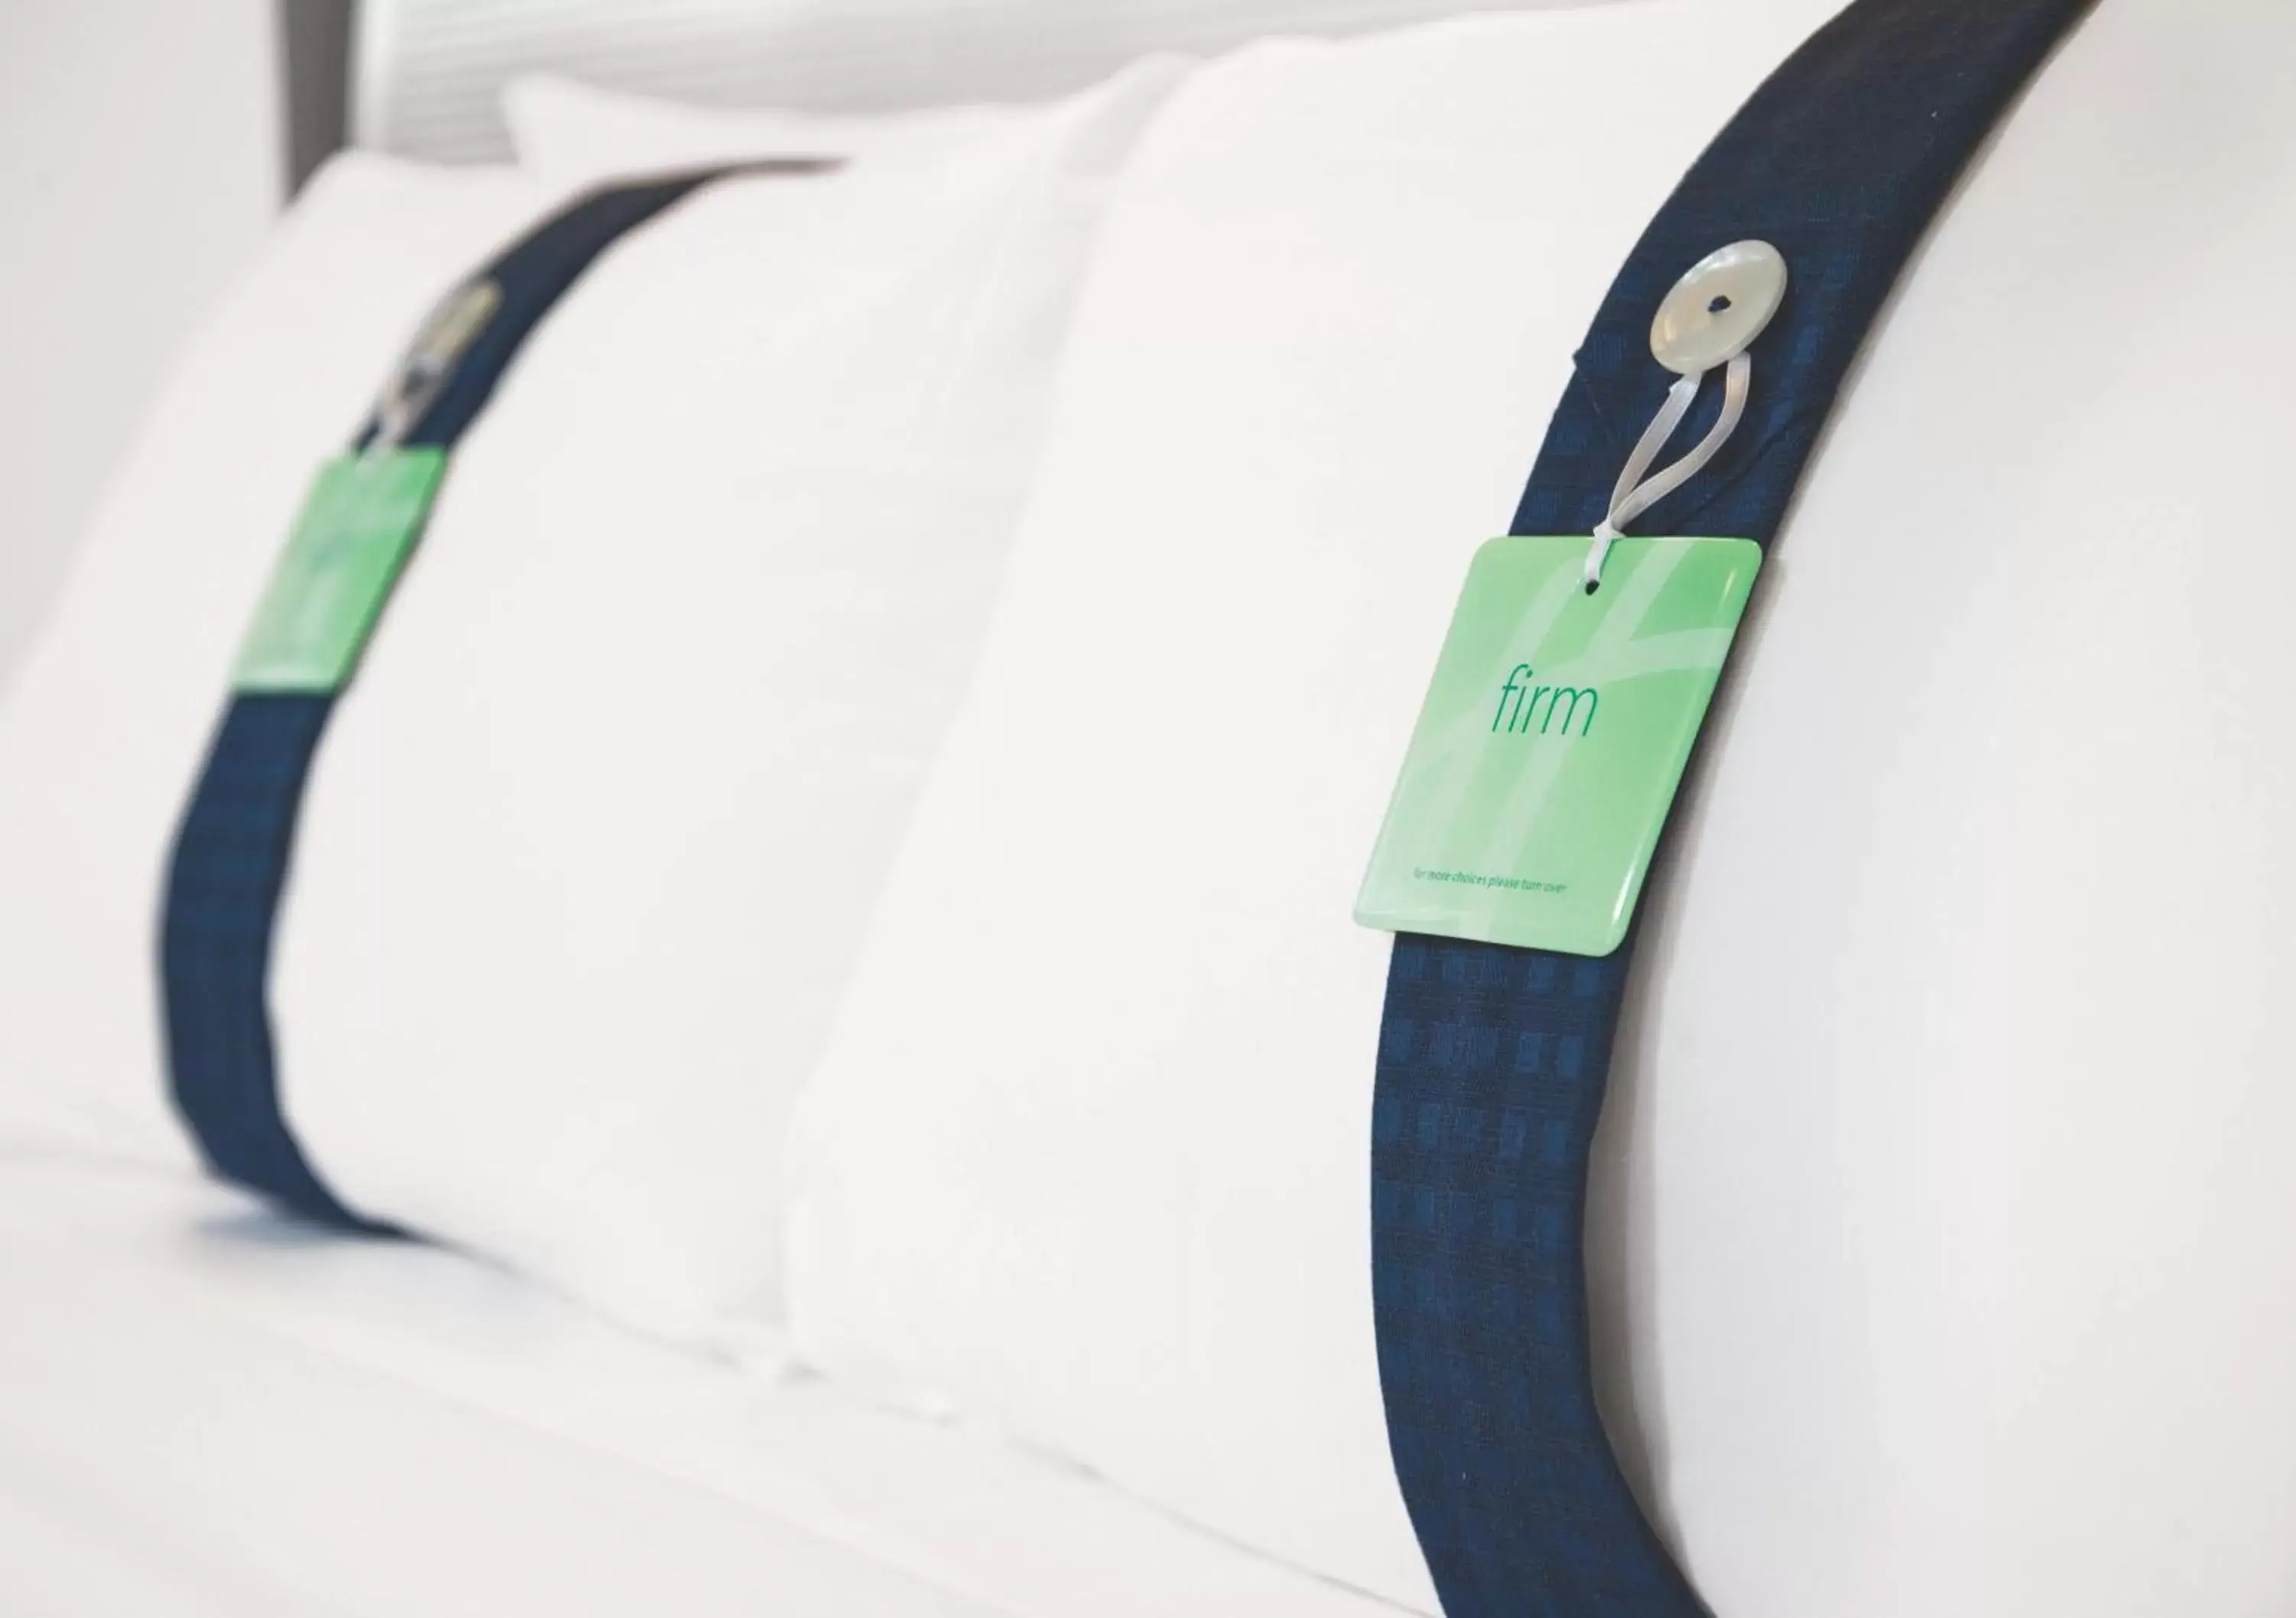 Bed in Holiday Inn Basildon, an IHG Hotel